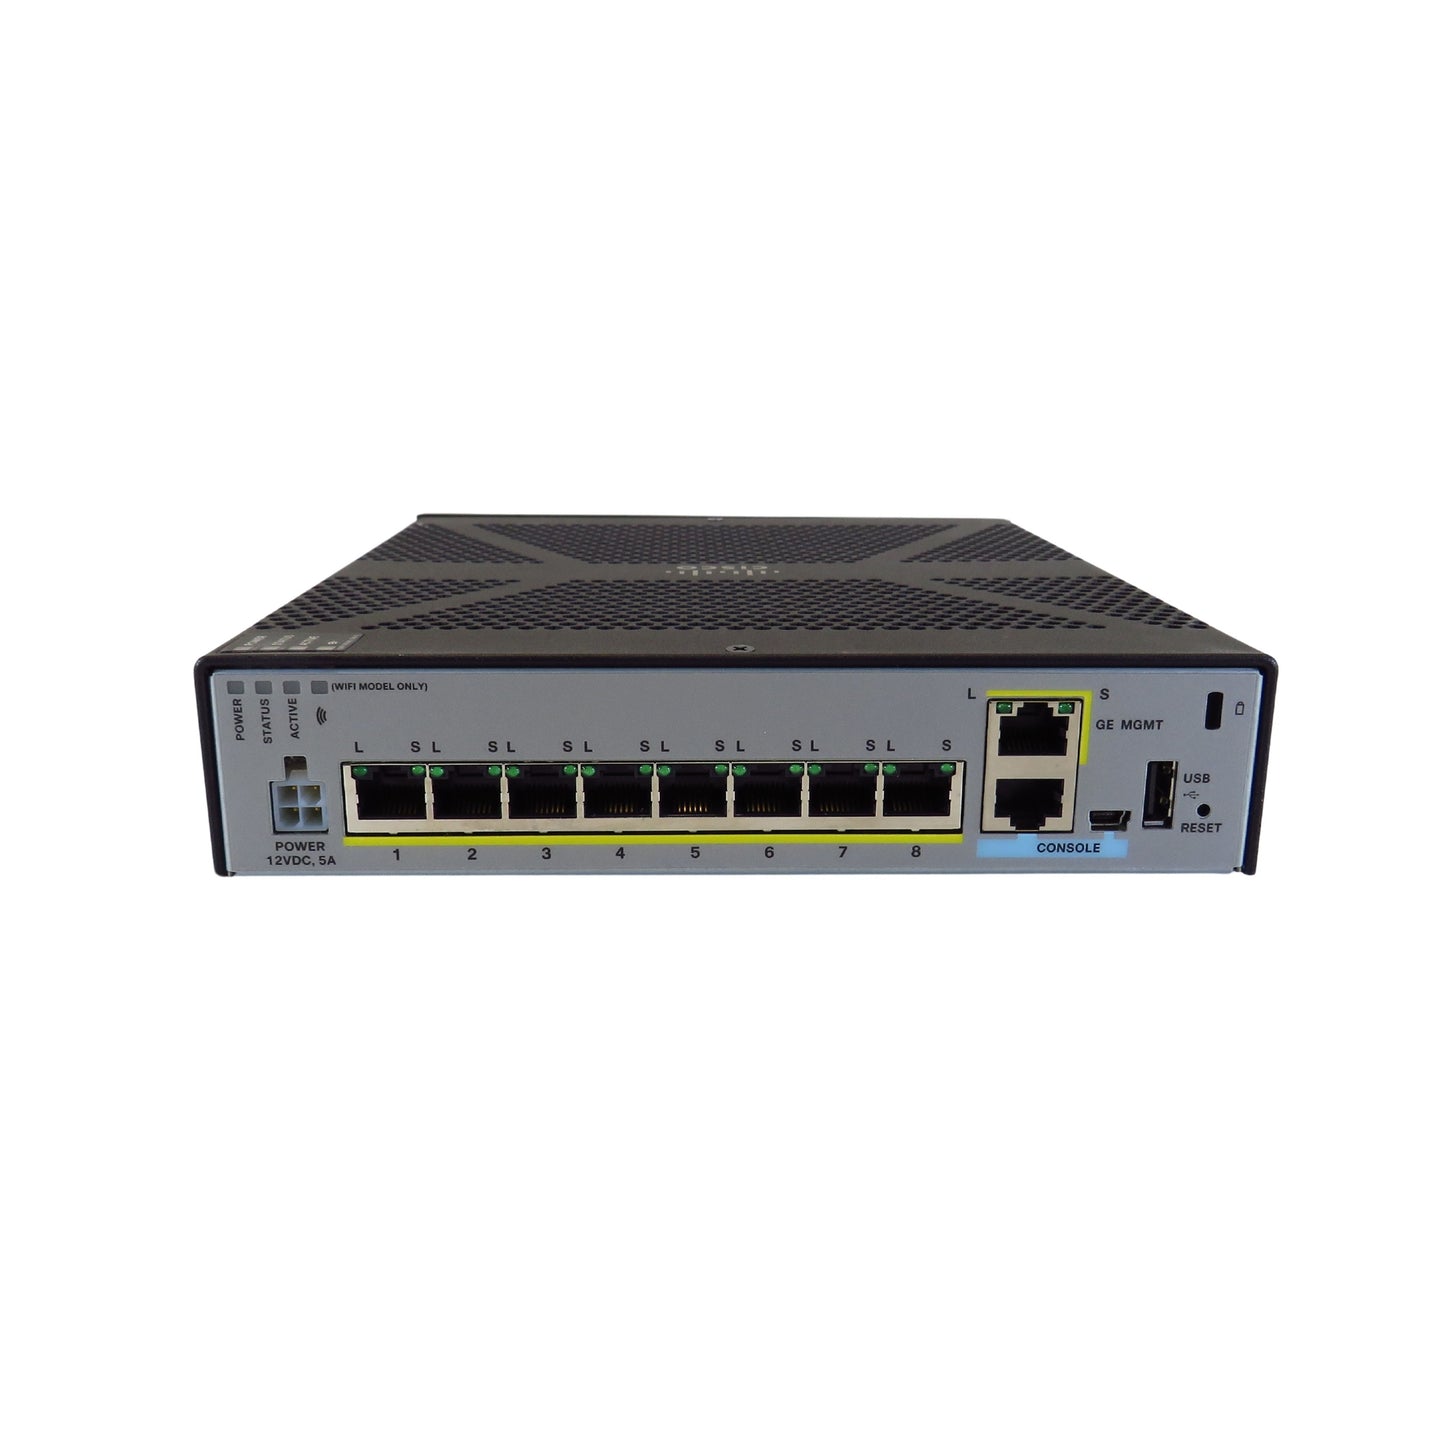 Cisco ASA5506-K9 ASA 5506-X 8 Port Gigabit Ethernet Security Appliance (Refurbished)